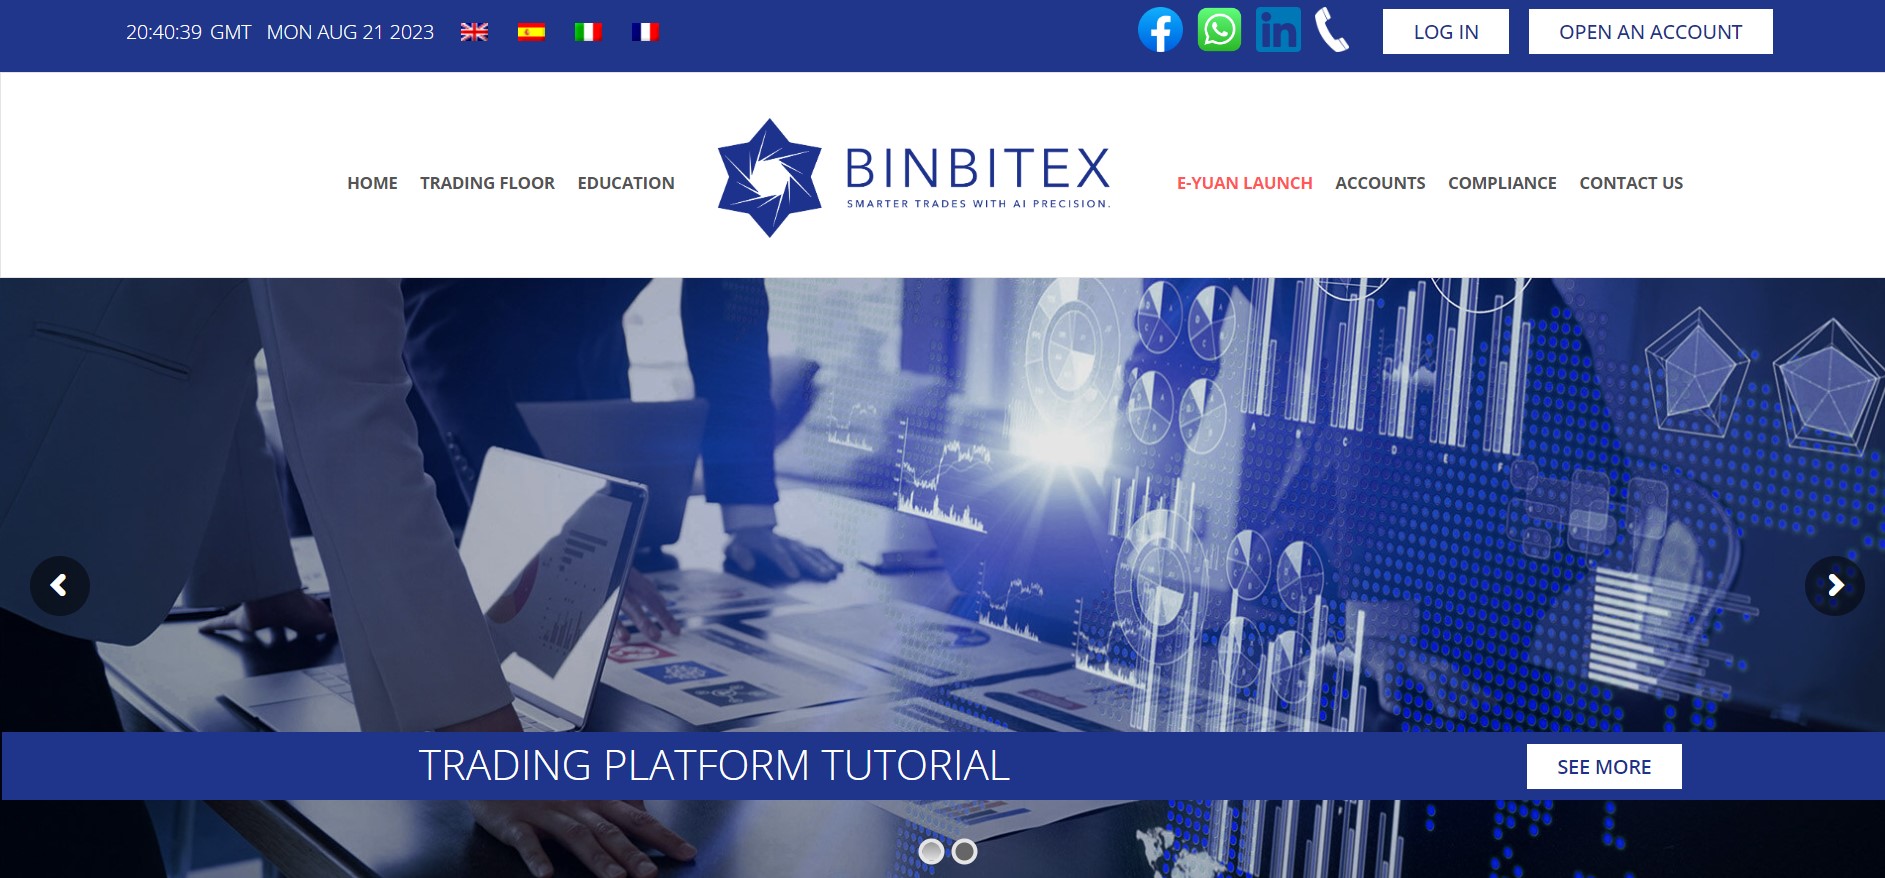 Binbitex website